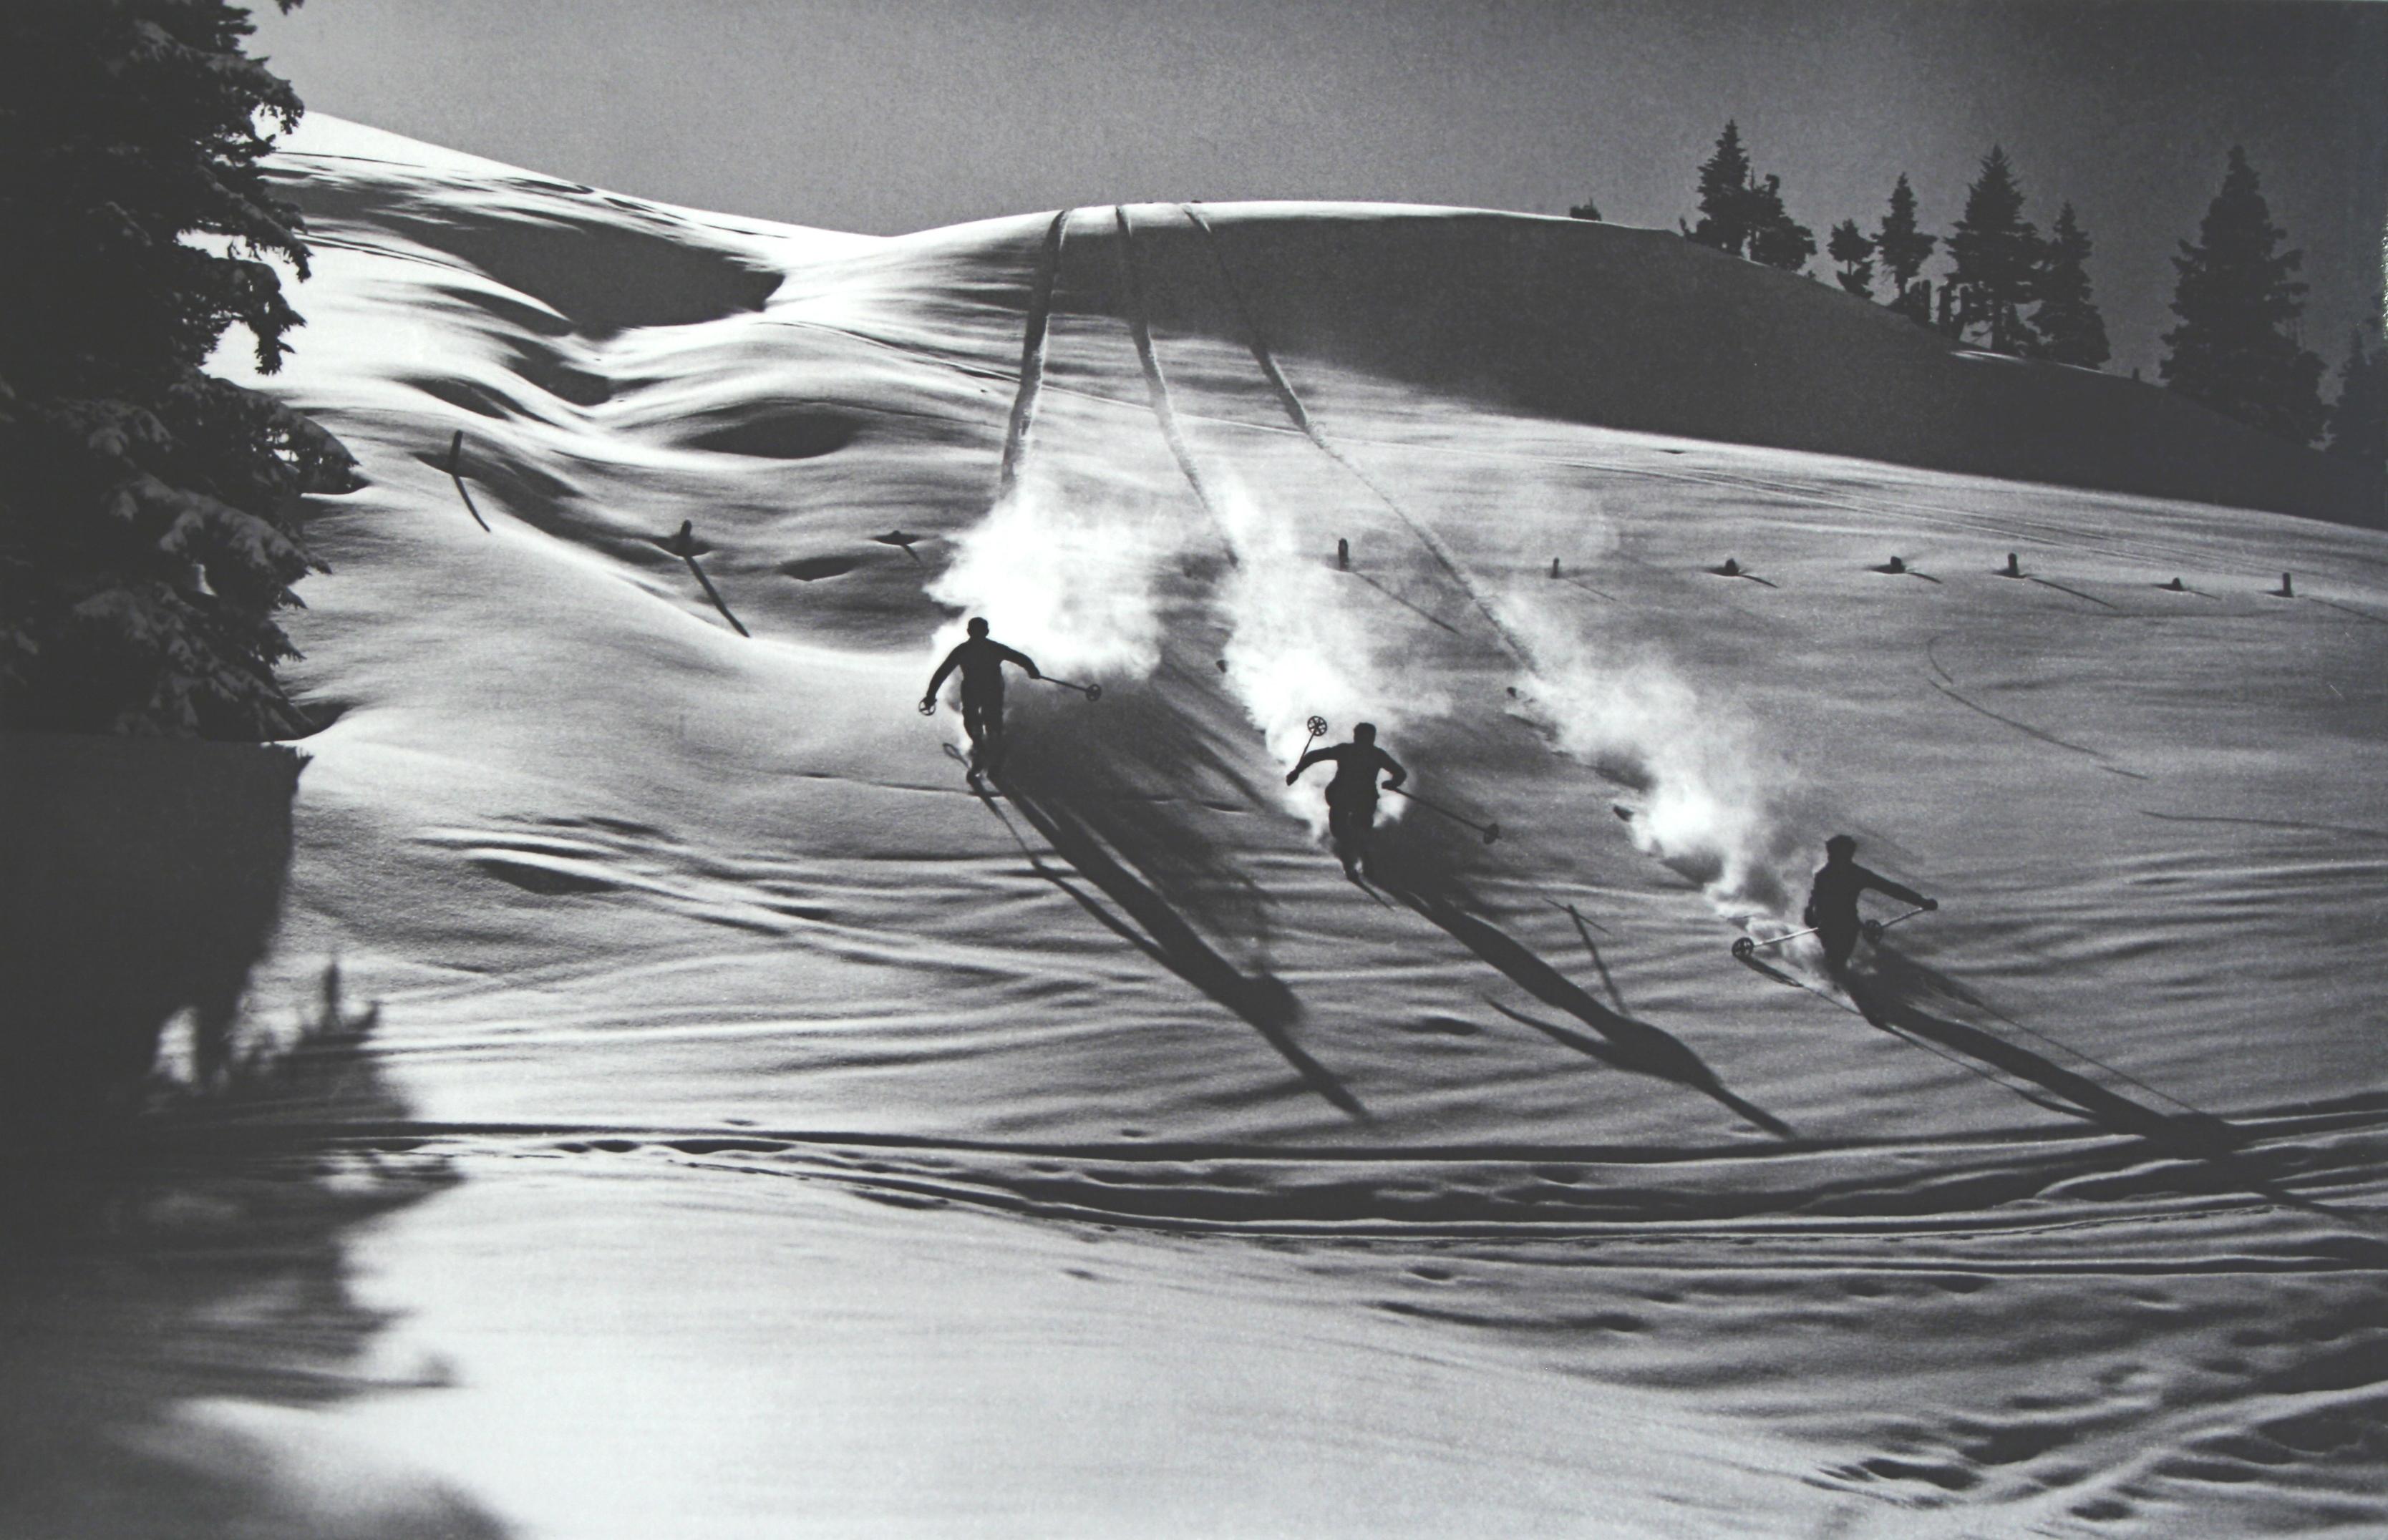 British Alpine Ski Photograph, 'Descent in Powder' Taken from Original 1930s Photograph